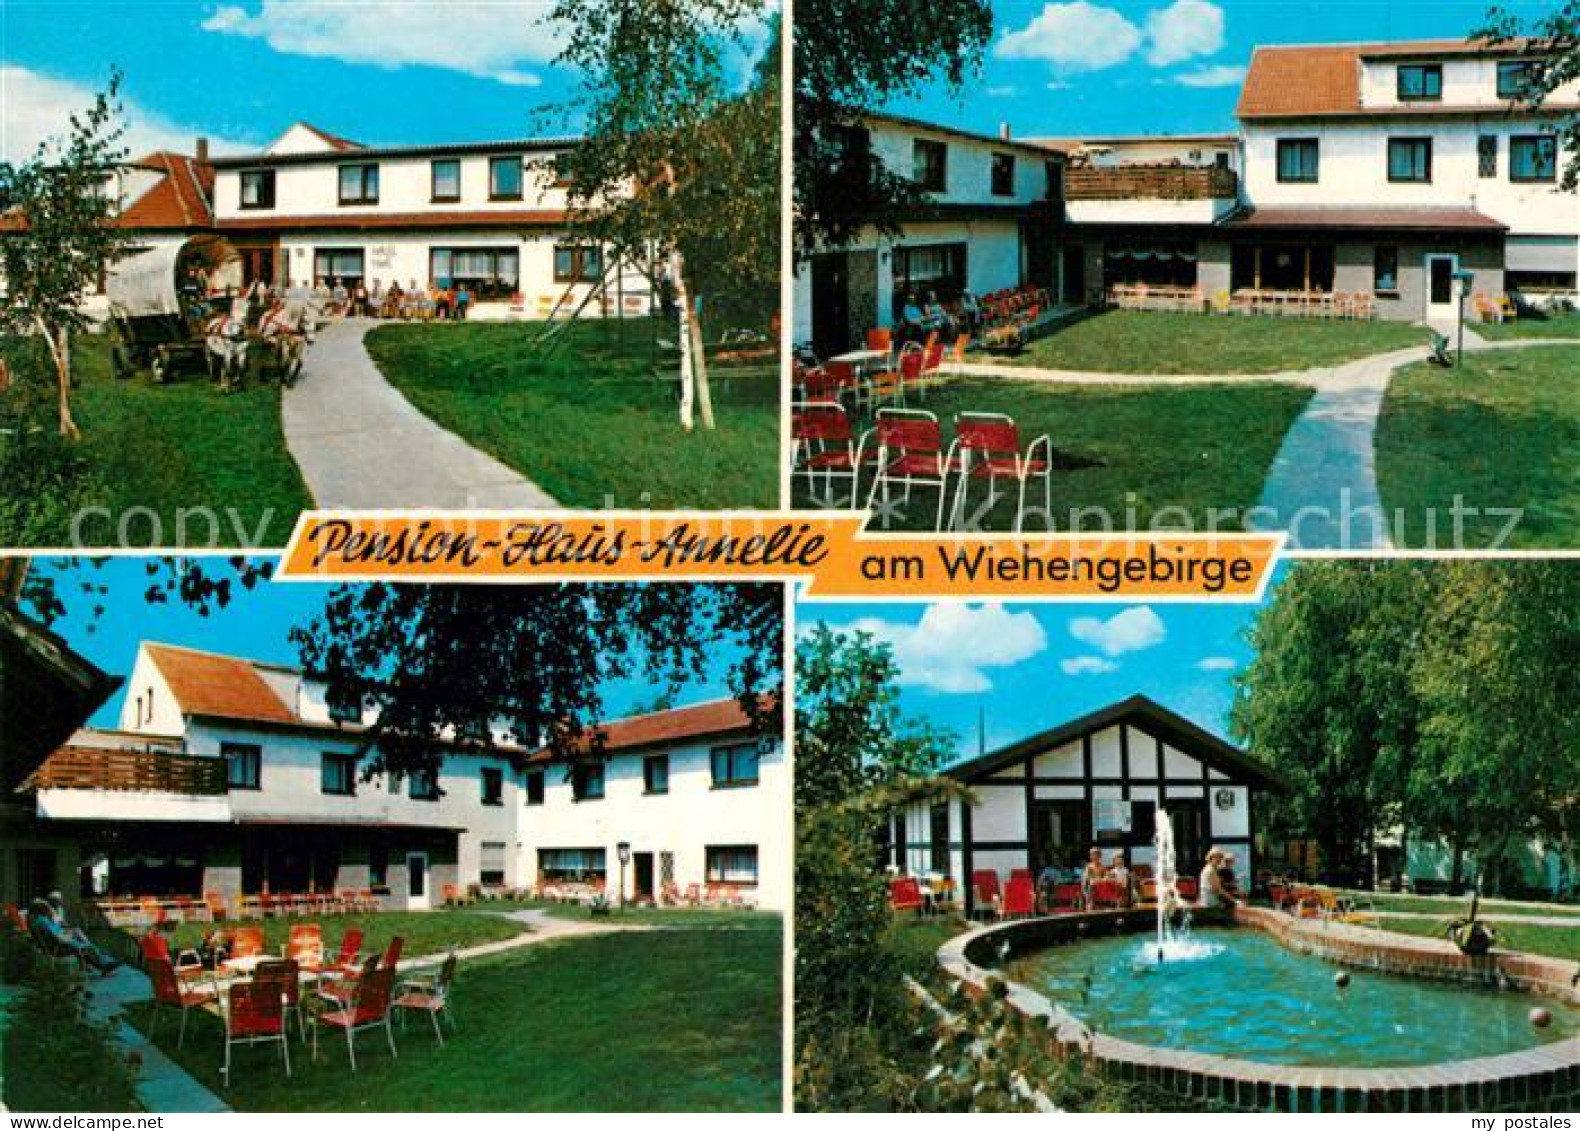 73172628 Bad Holzhausen Luebbecke Pension Haus Annelie Am Wiehengebirge Boerning - Getmold